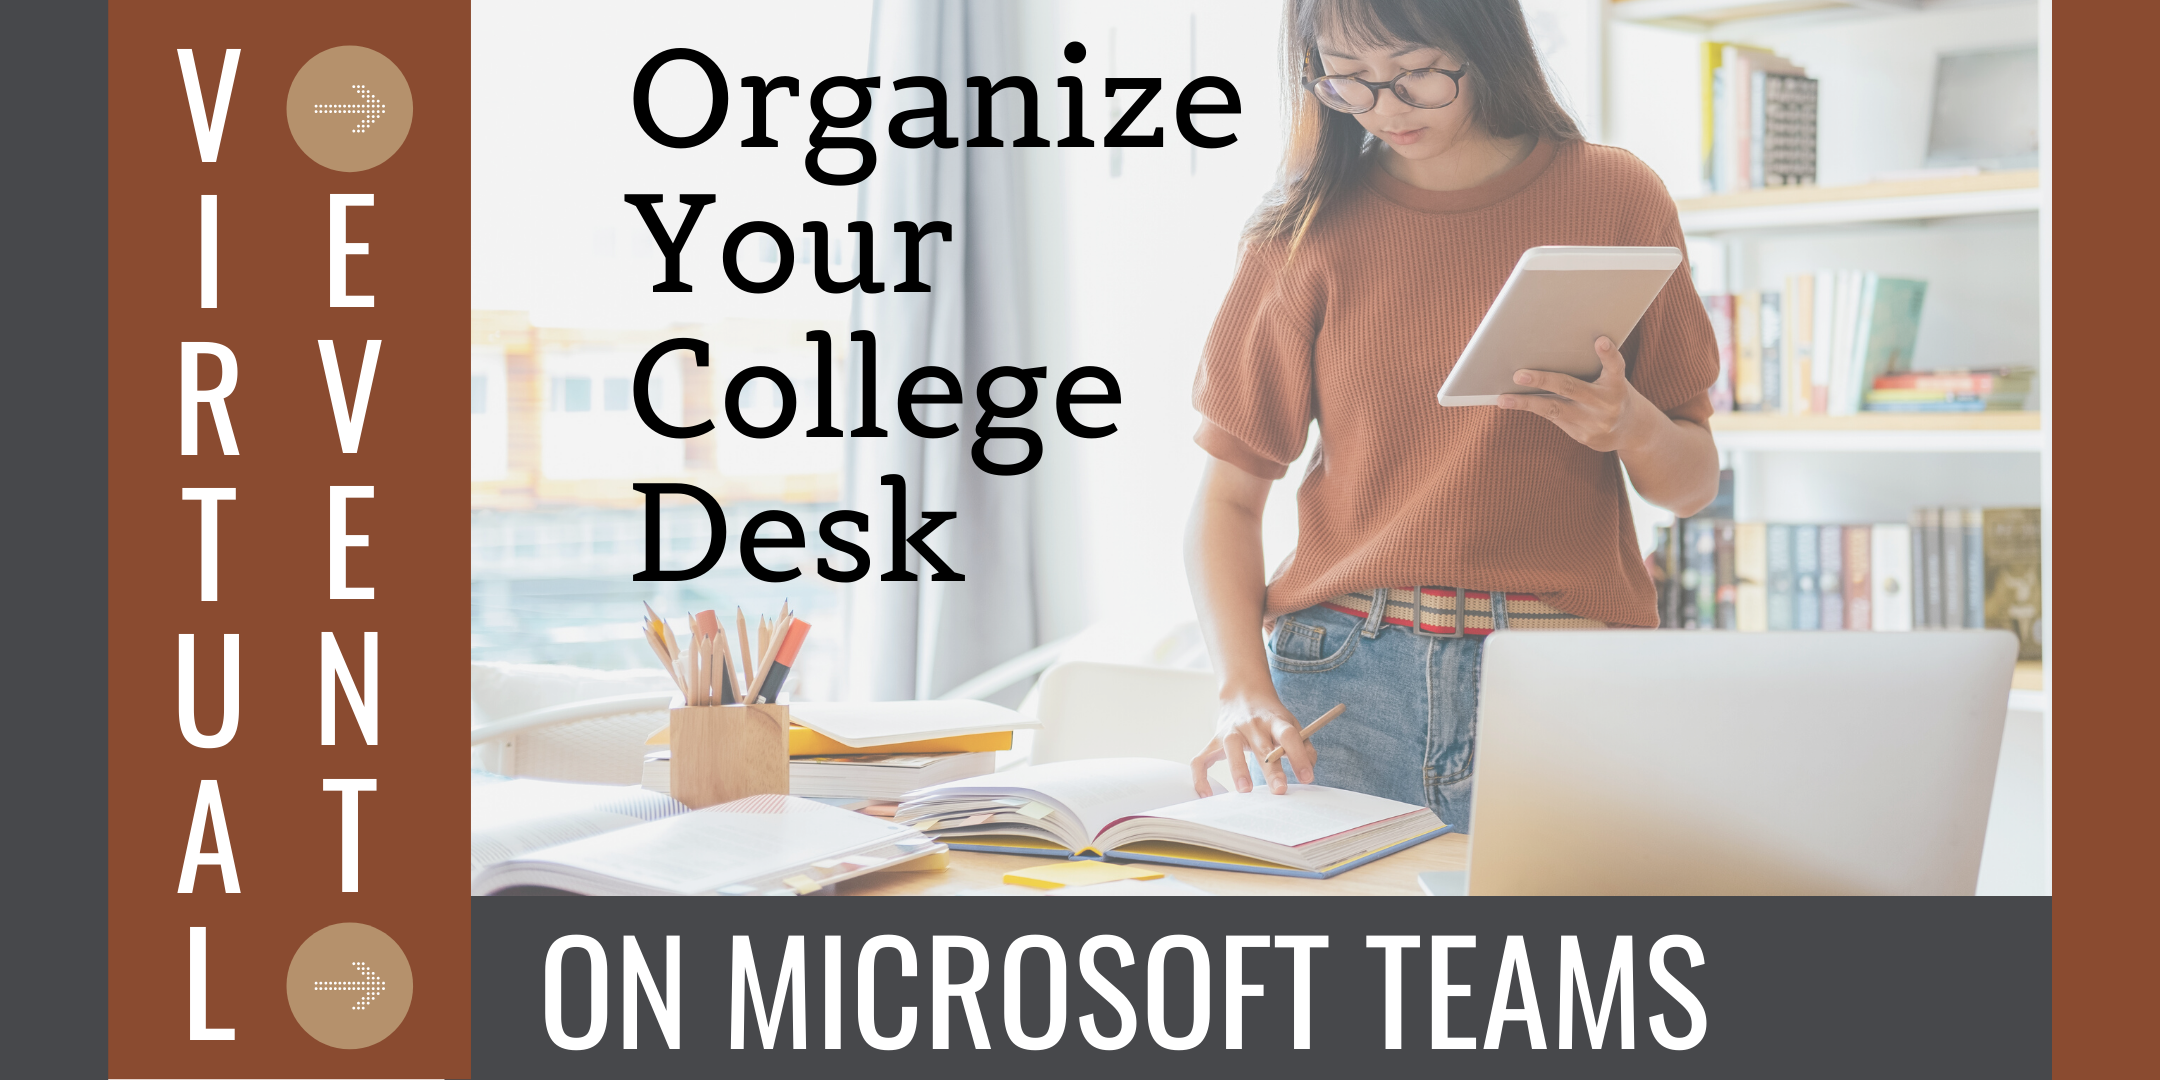 Organize Your College Desk: Virtual Event on Microsoft Teams